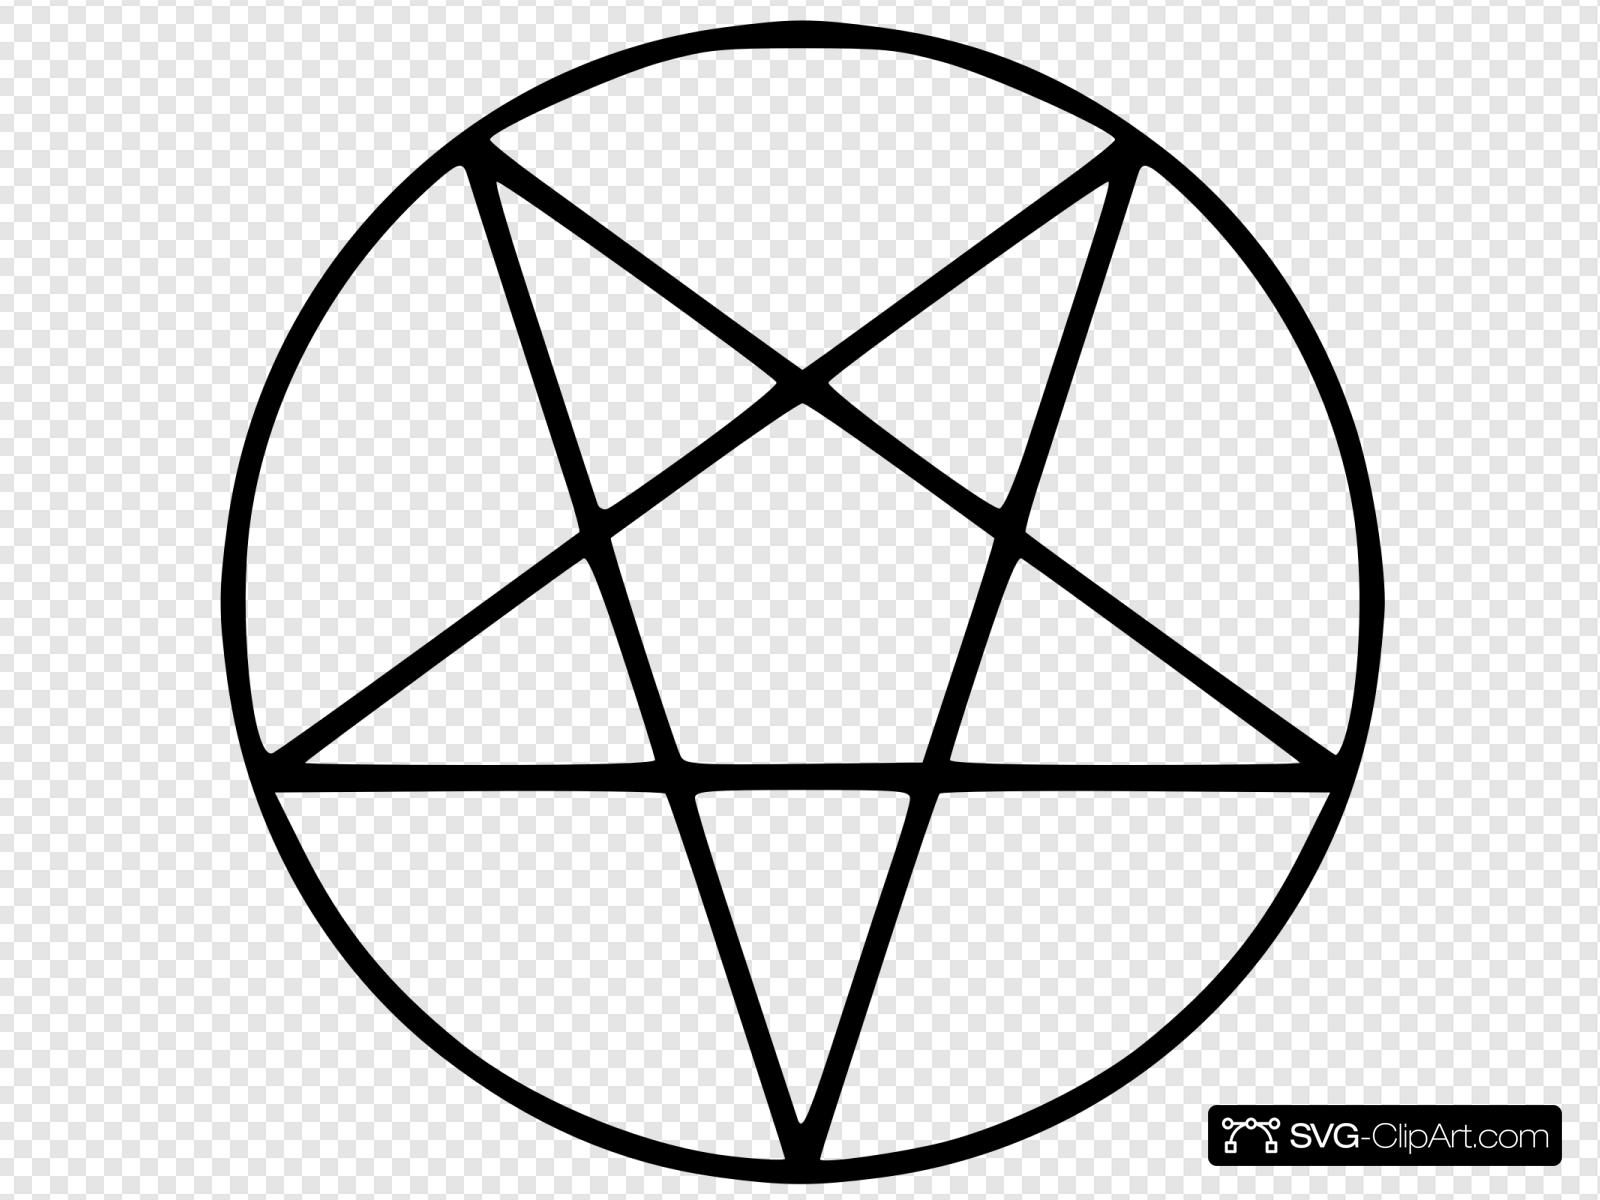 Pentagram Clip art, Icon and SVG